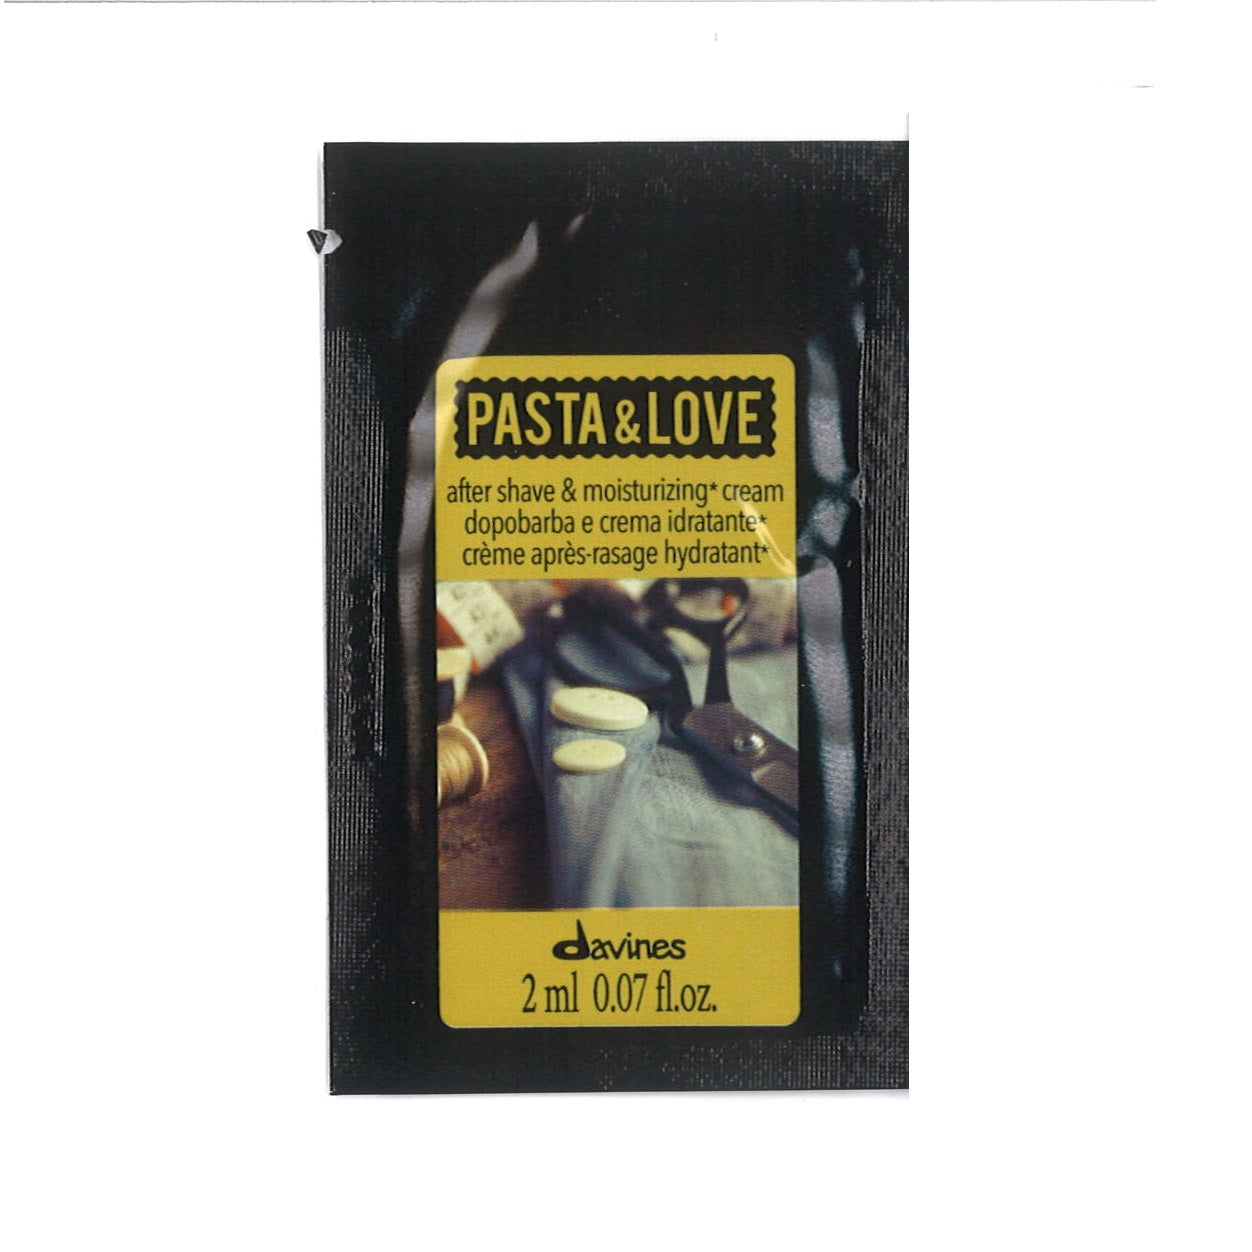 Pasta & Love After Shave & Moisturizing Cream